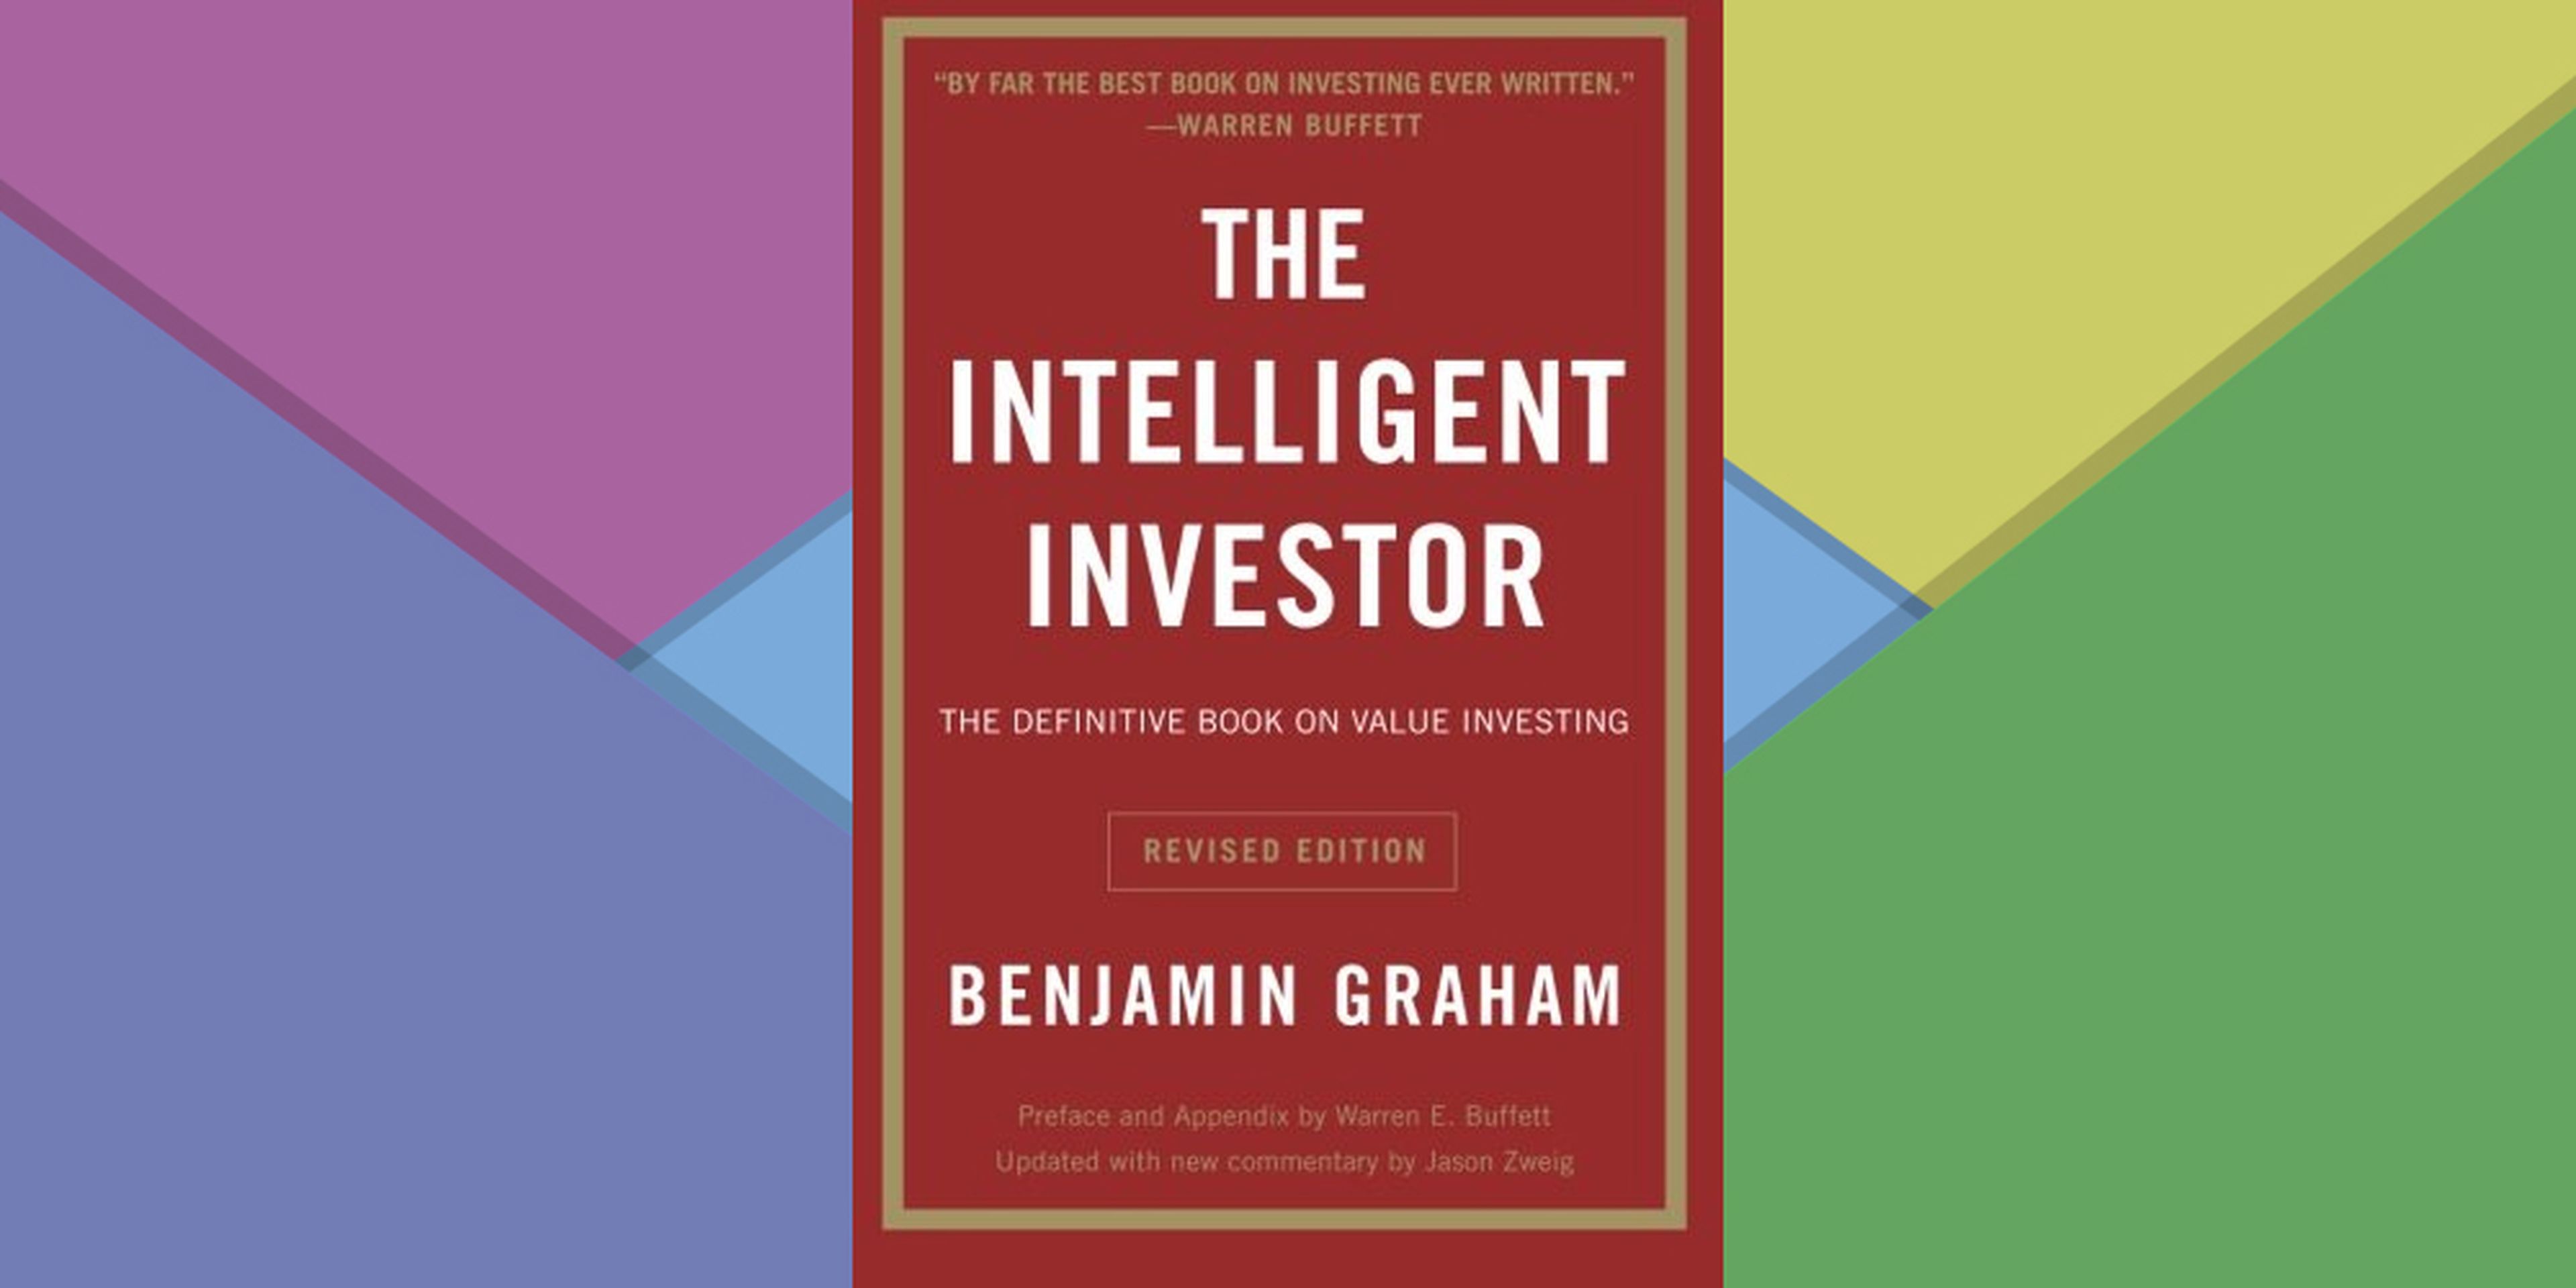 Warren Buffett: "The Intelligent Investor"